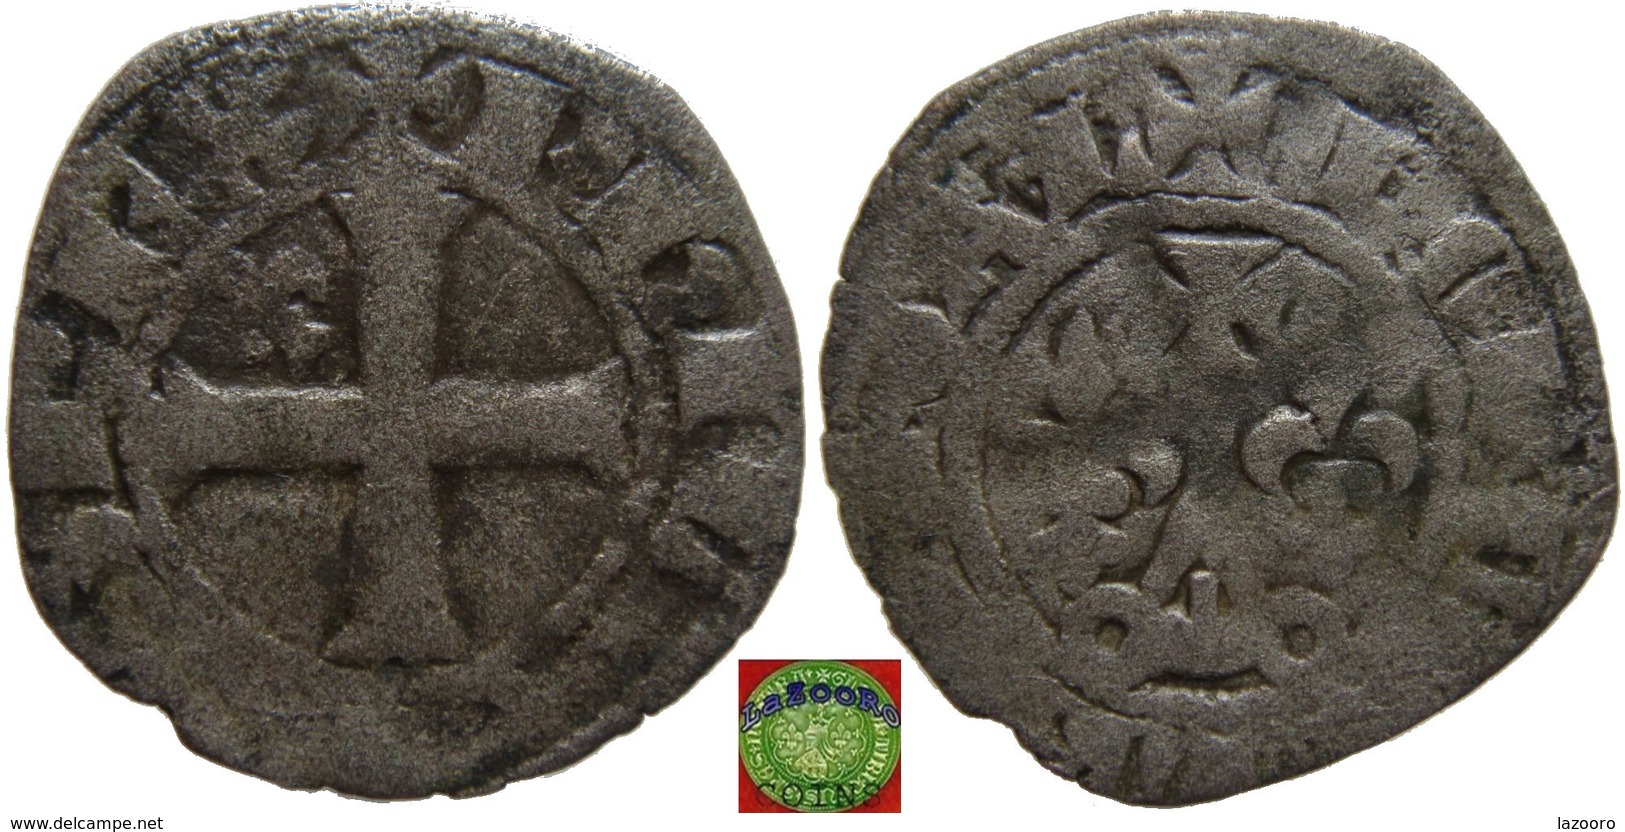 LaZooRo: France - AR Double Tournois Of Philip IV (1285-1314), MON DVPLEX REGAL - Silver - 1285-1314 Philippe IV Le Bel